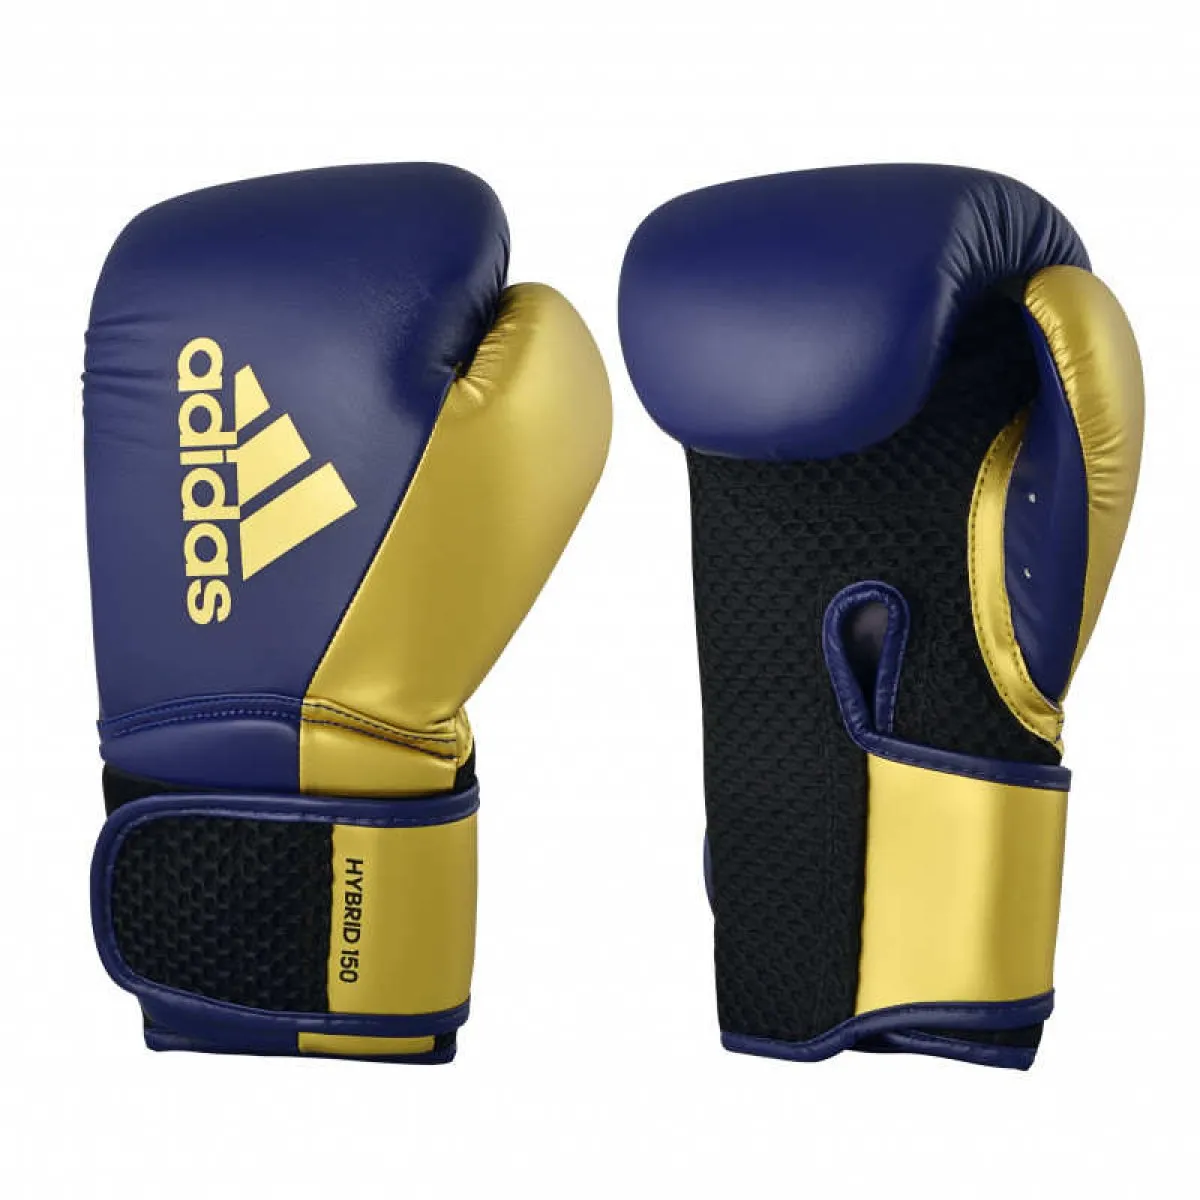 adidas Boxing Glove Hybrid 150 navy blue/gold